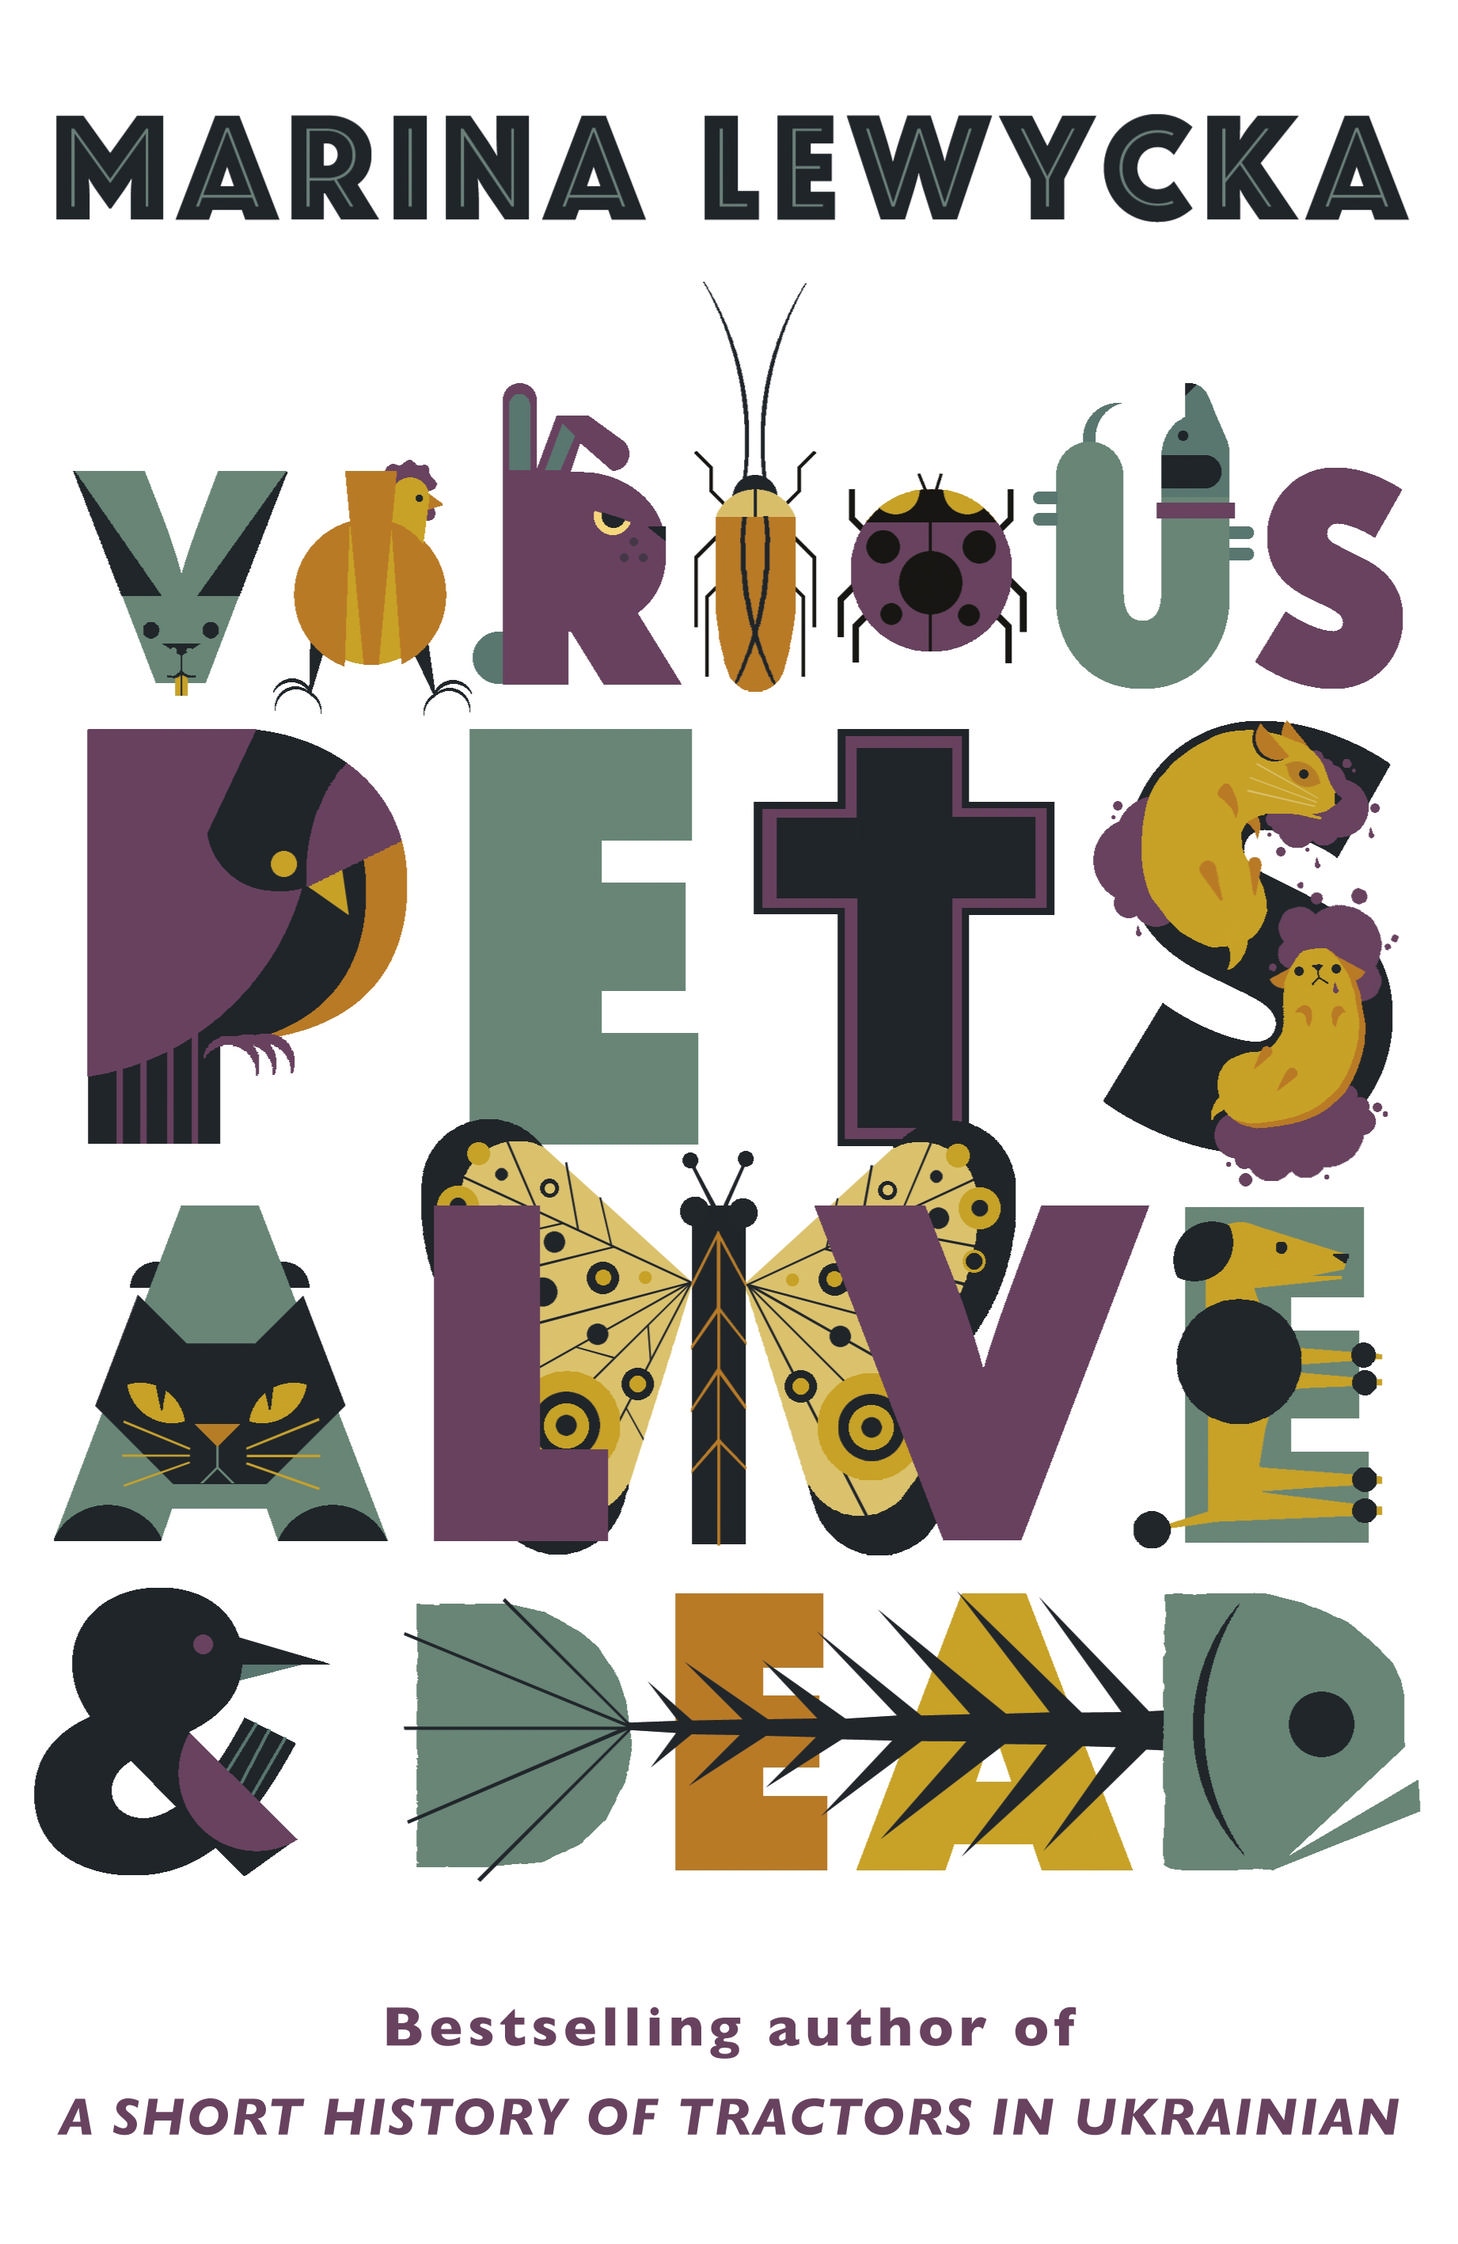 Автор short. Various Pets Alive & Dead. Пингвин Pets Alive. Lewycka Marina "two Caravans".